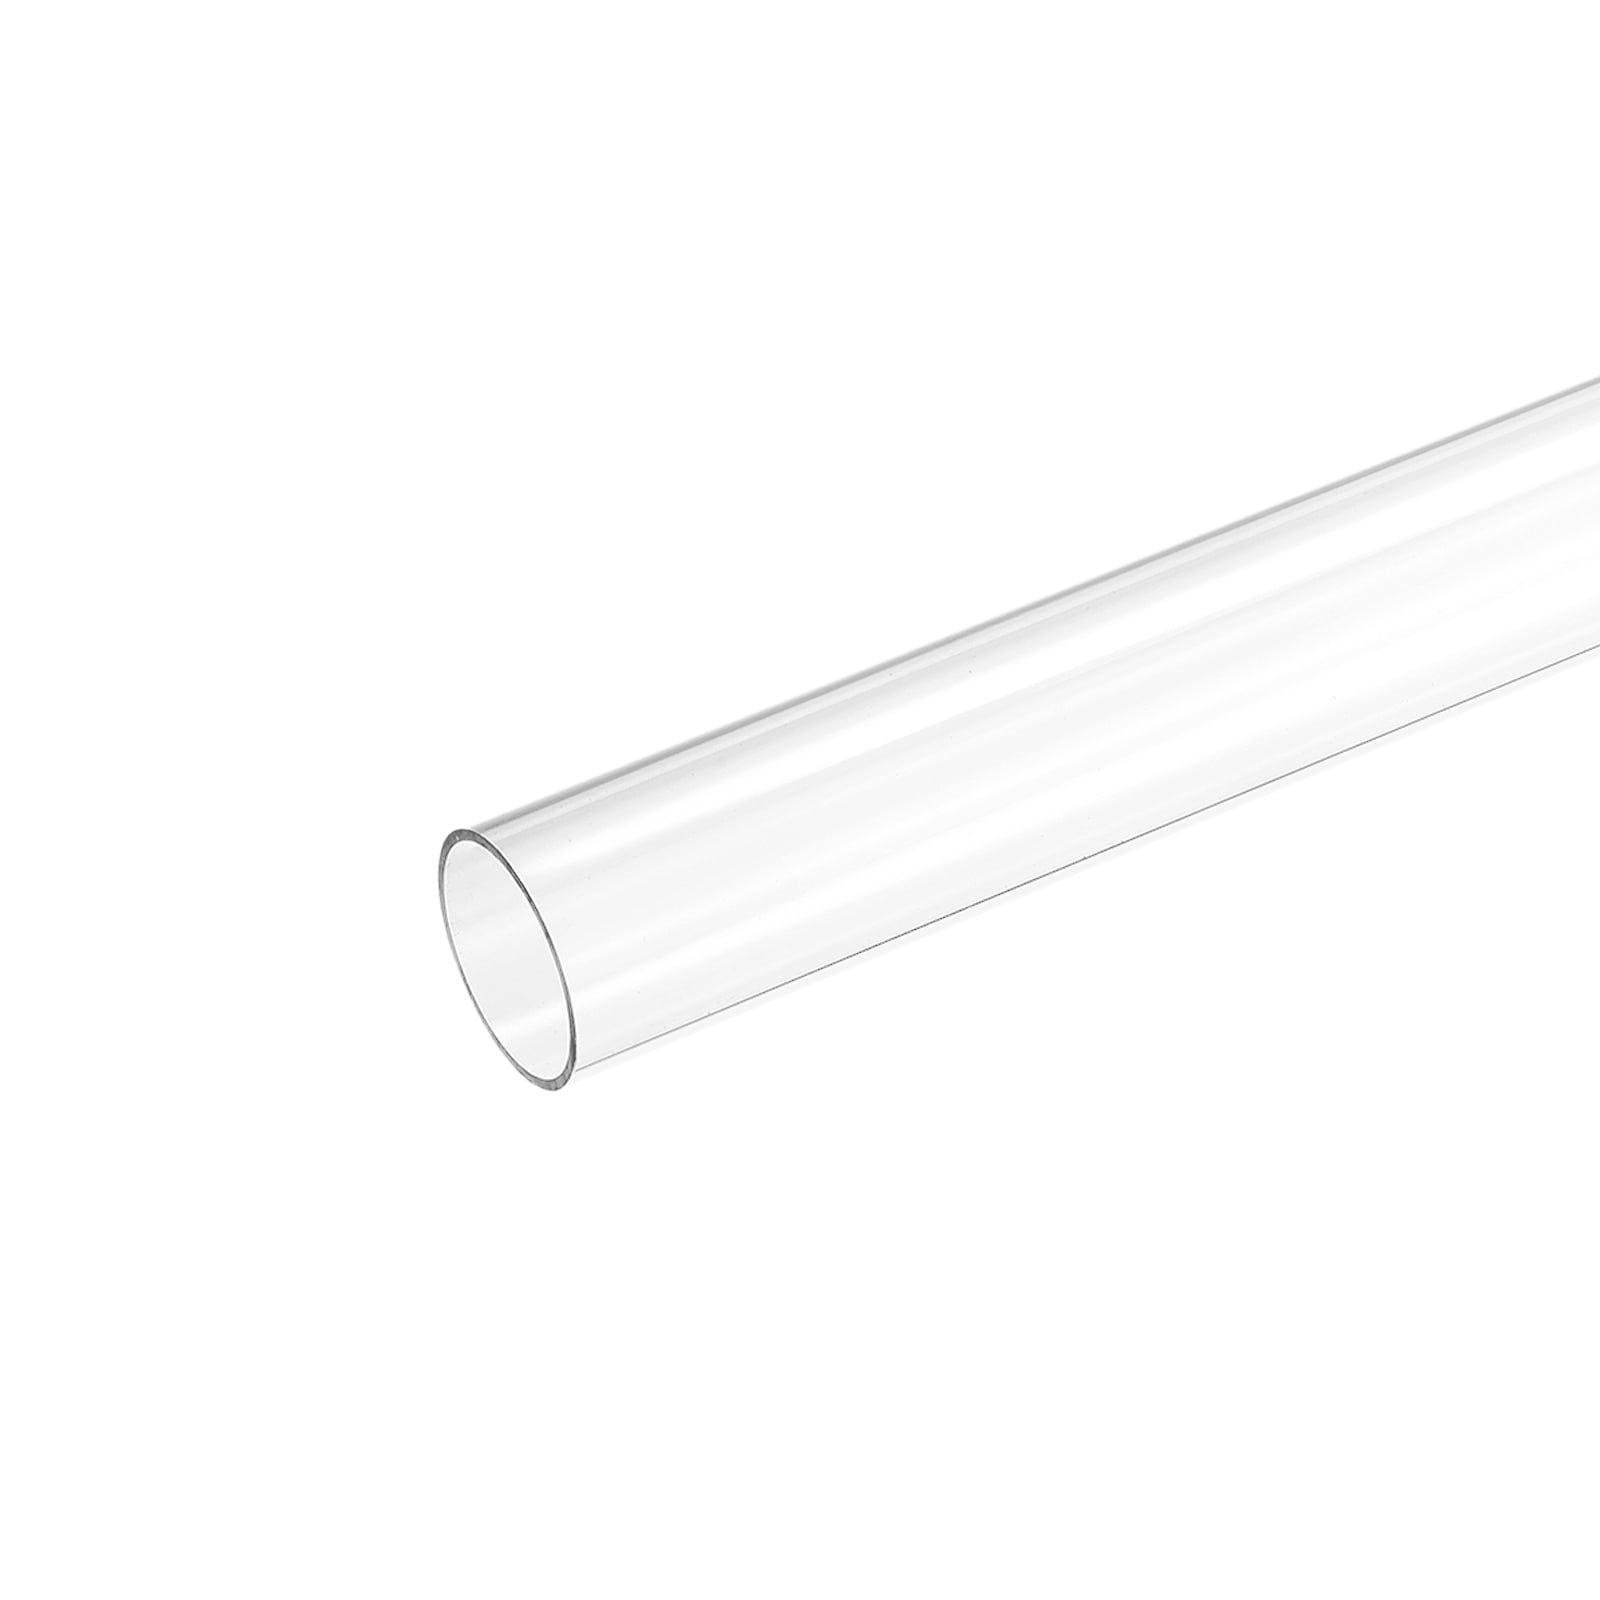 MECCANIXITY Tubo de plástico rígido de policarbonato redondo tubo  transparente 3.4 (86 mm) ID 3.5 (90 mm) OD 9.6 (245 mm) de alto impacto  para